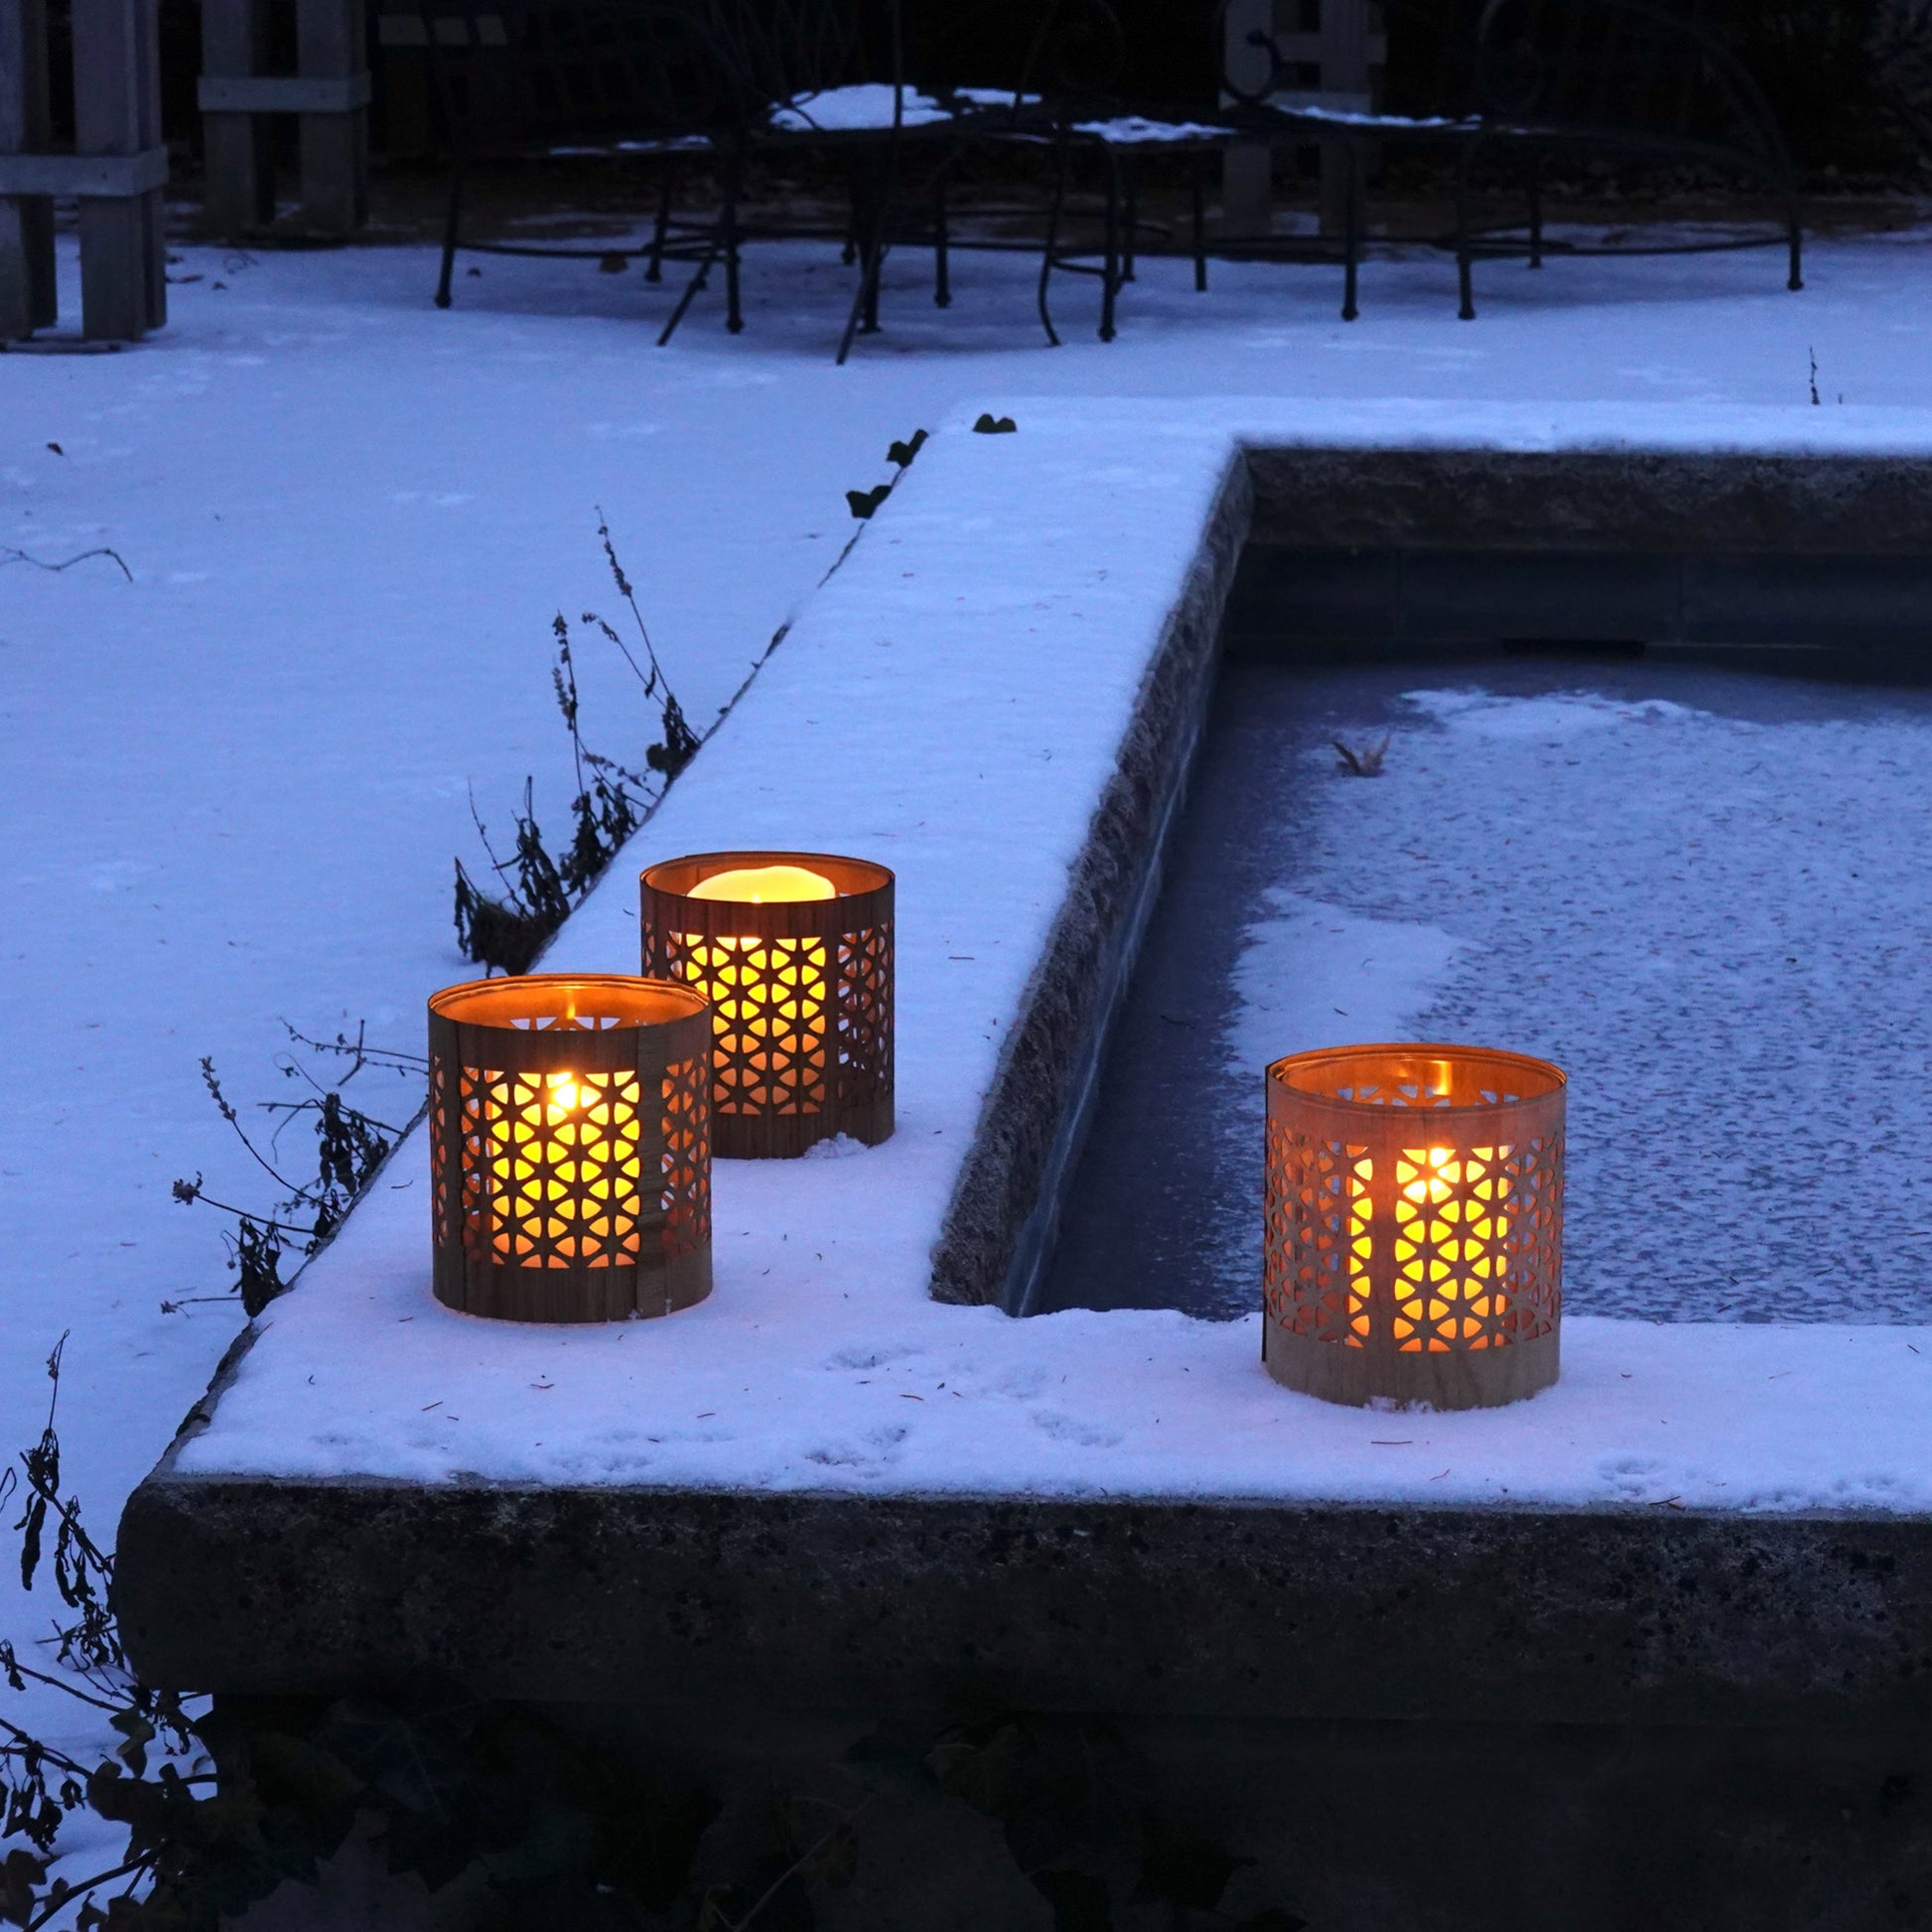 three mid-century modern lanterns in the snow by a frozen hot tub